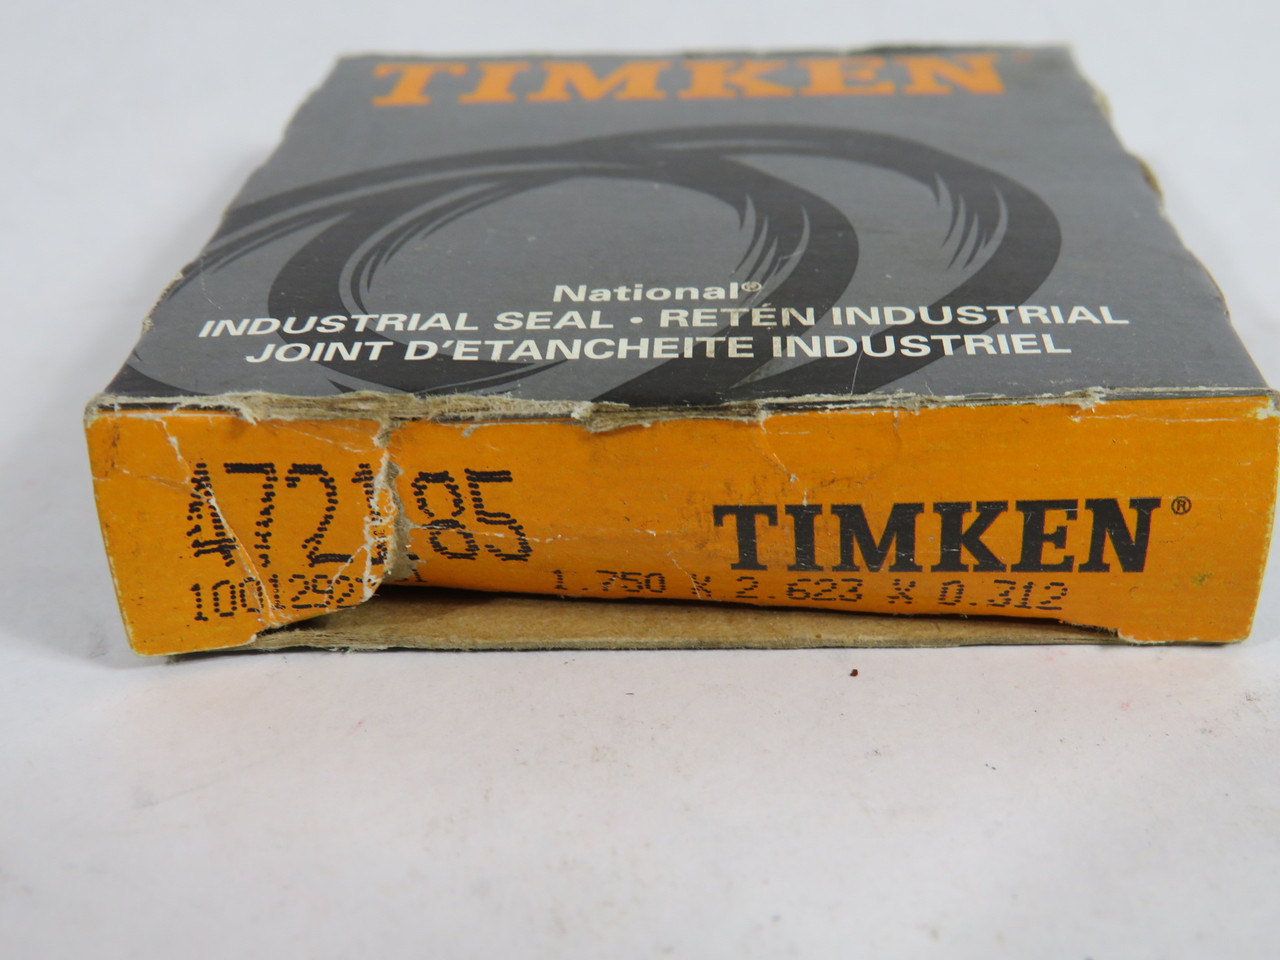 Timken 472185 National Oil Seal 1.750"ID 2.623"OD 0.312"W *Damaged Box* NEW